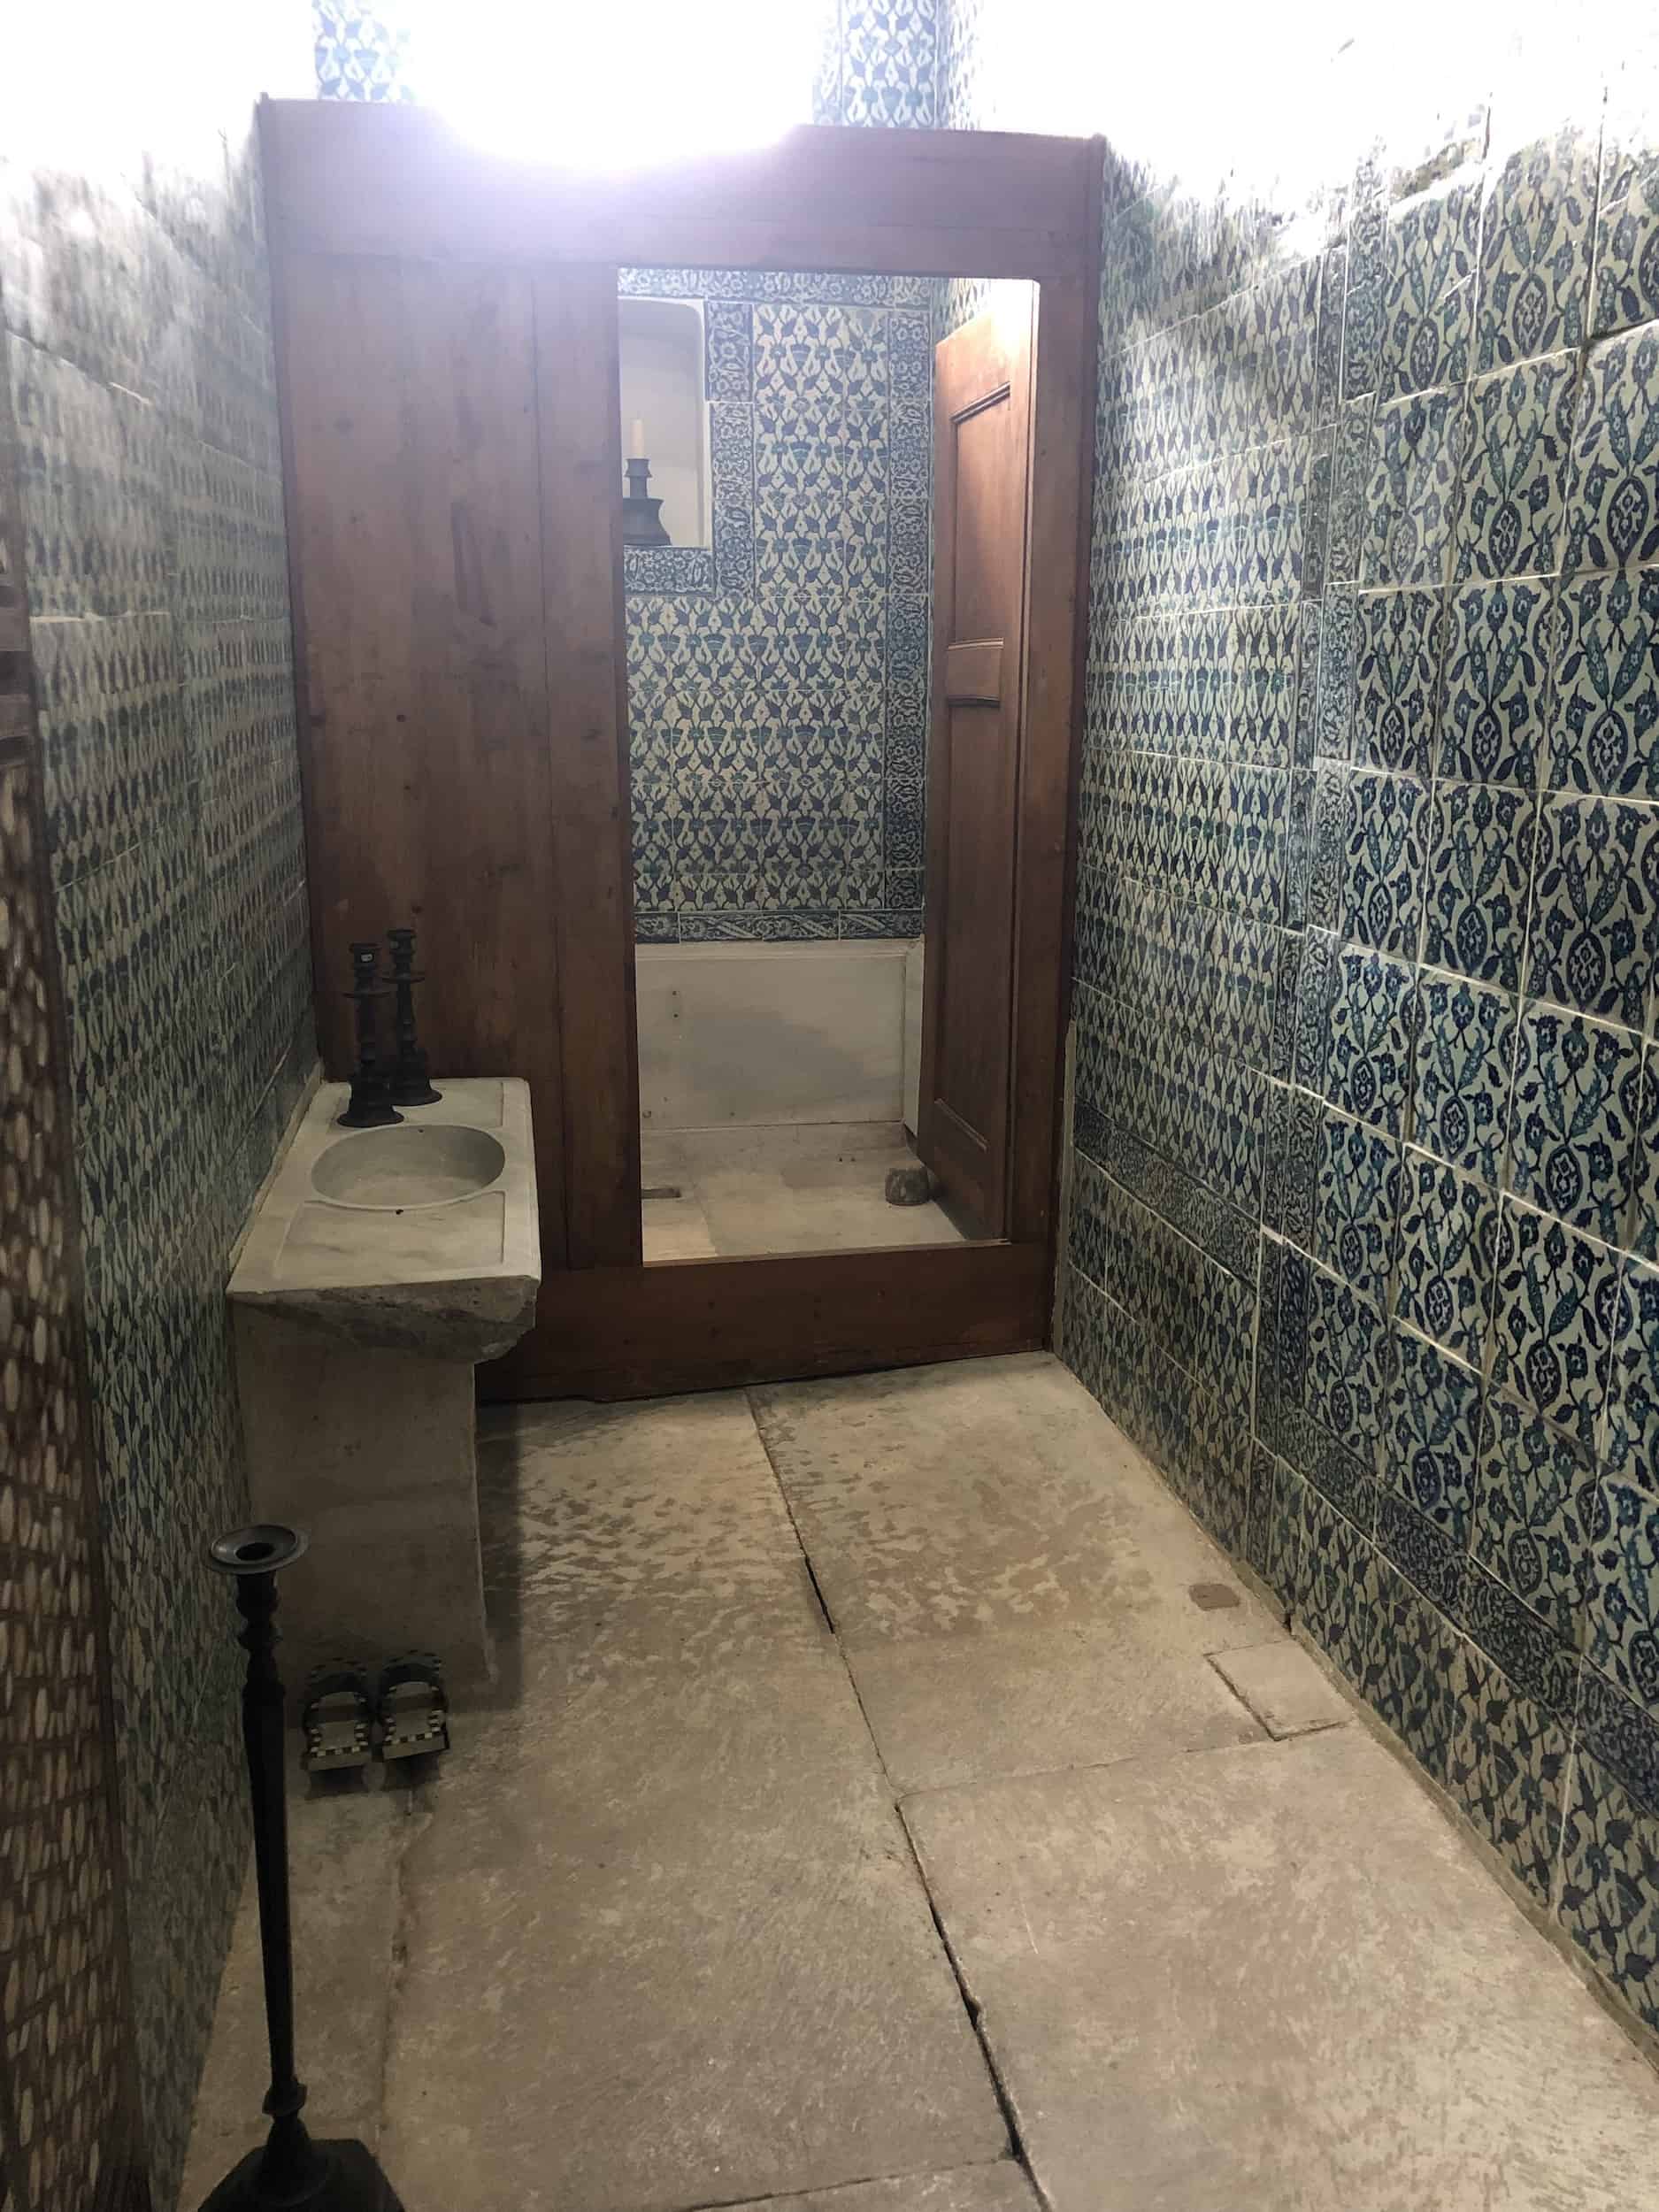 Bathroom at the Sultan's Pavilion